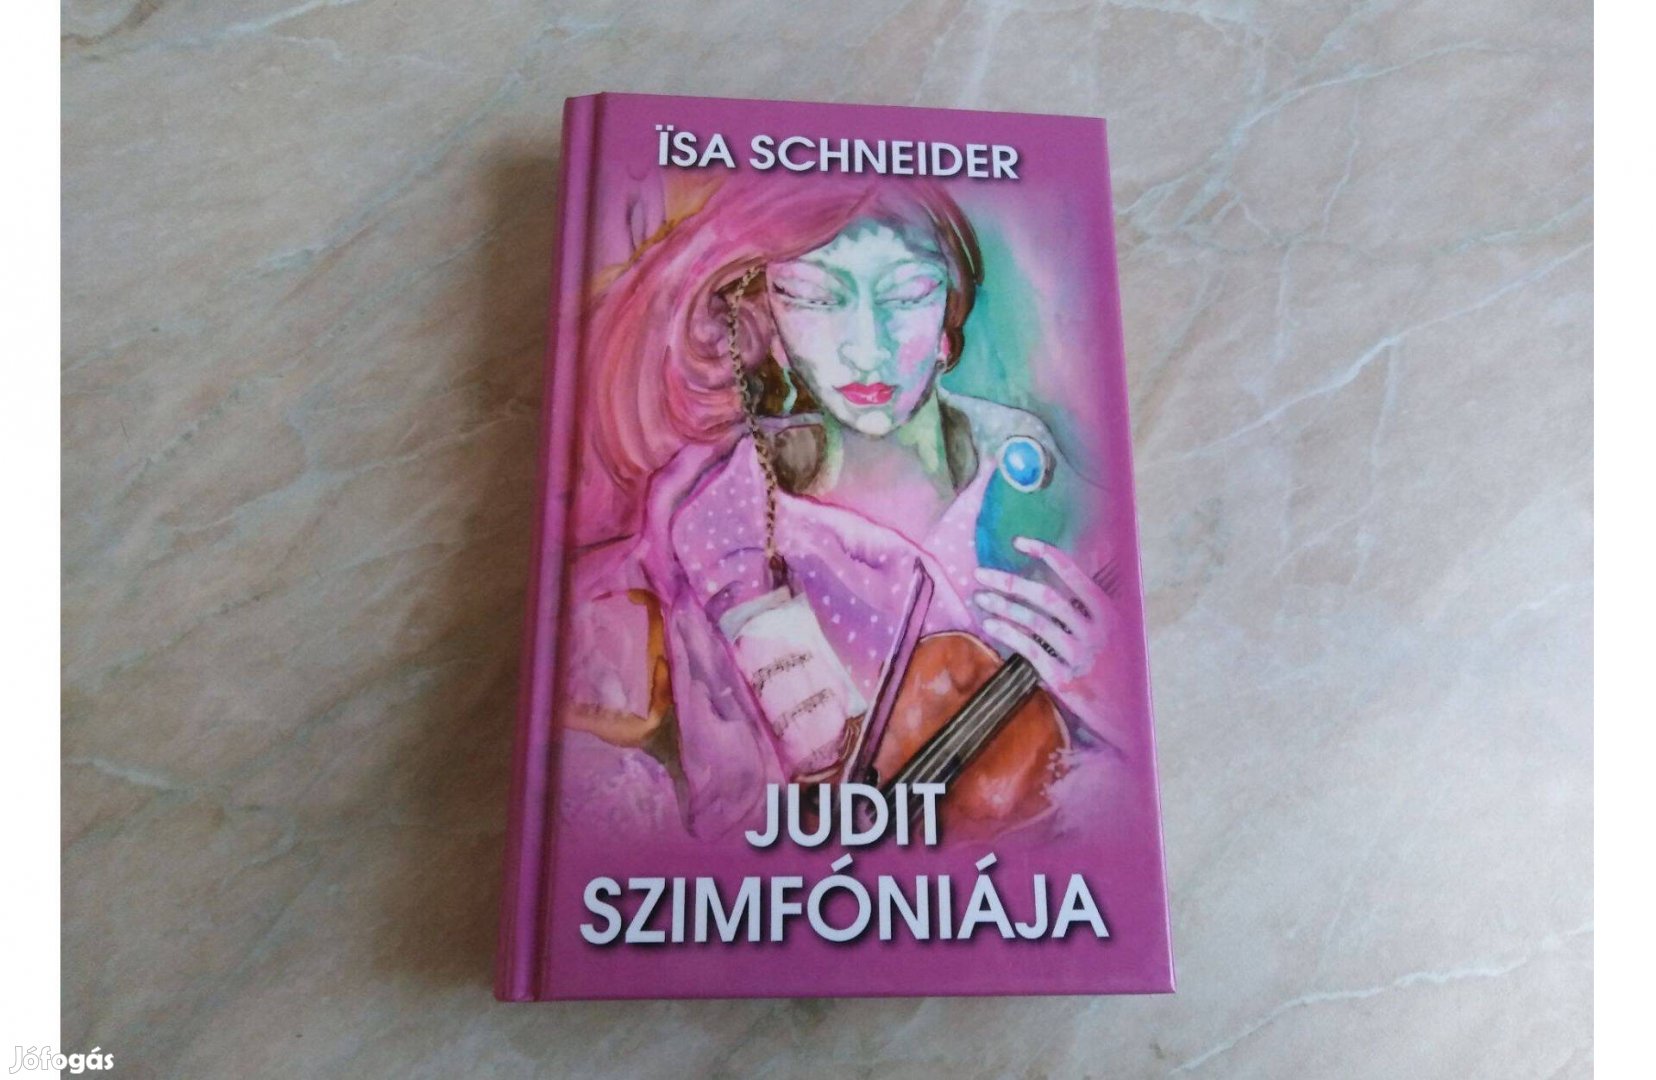 Judit szimfóniája - Isa Schneider